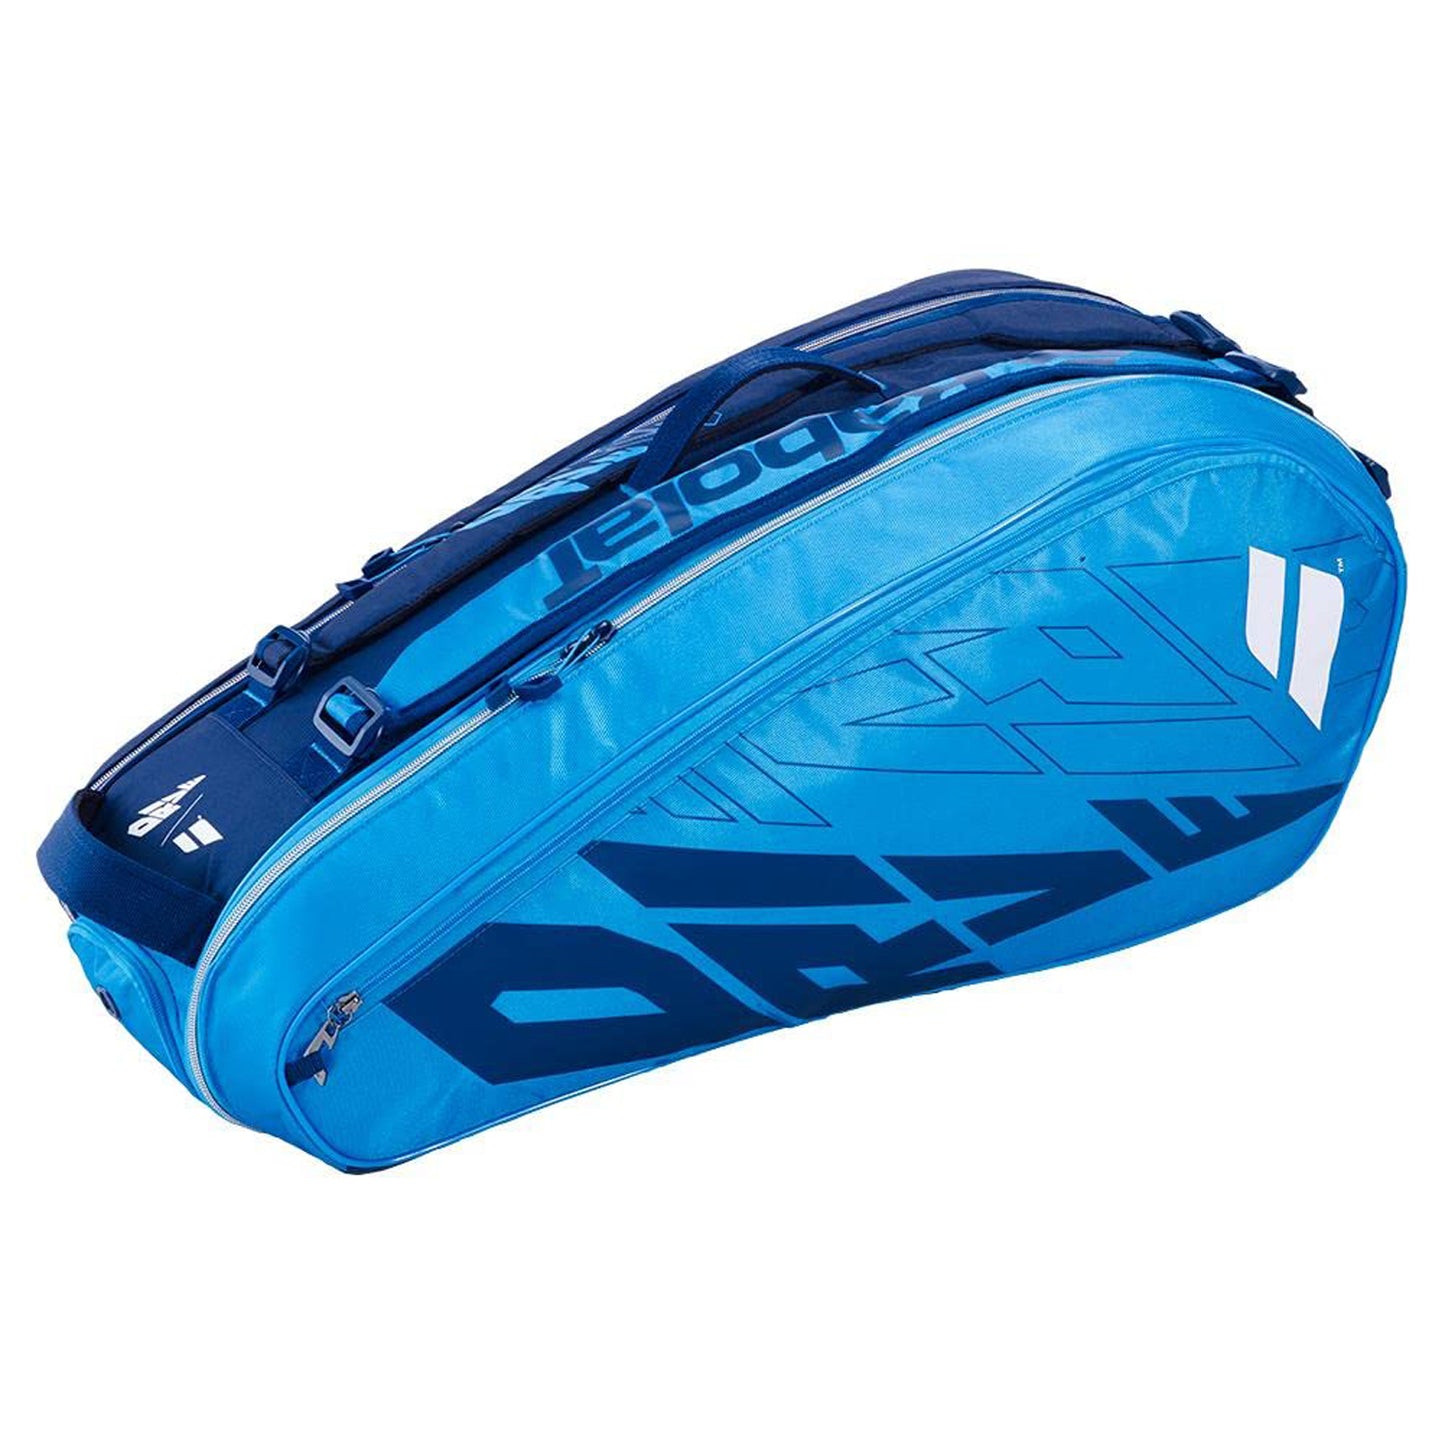 Babolat RH X 6 Pure Drive Tennis Kitbag, Blue - Best Price online Prokicksports.com